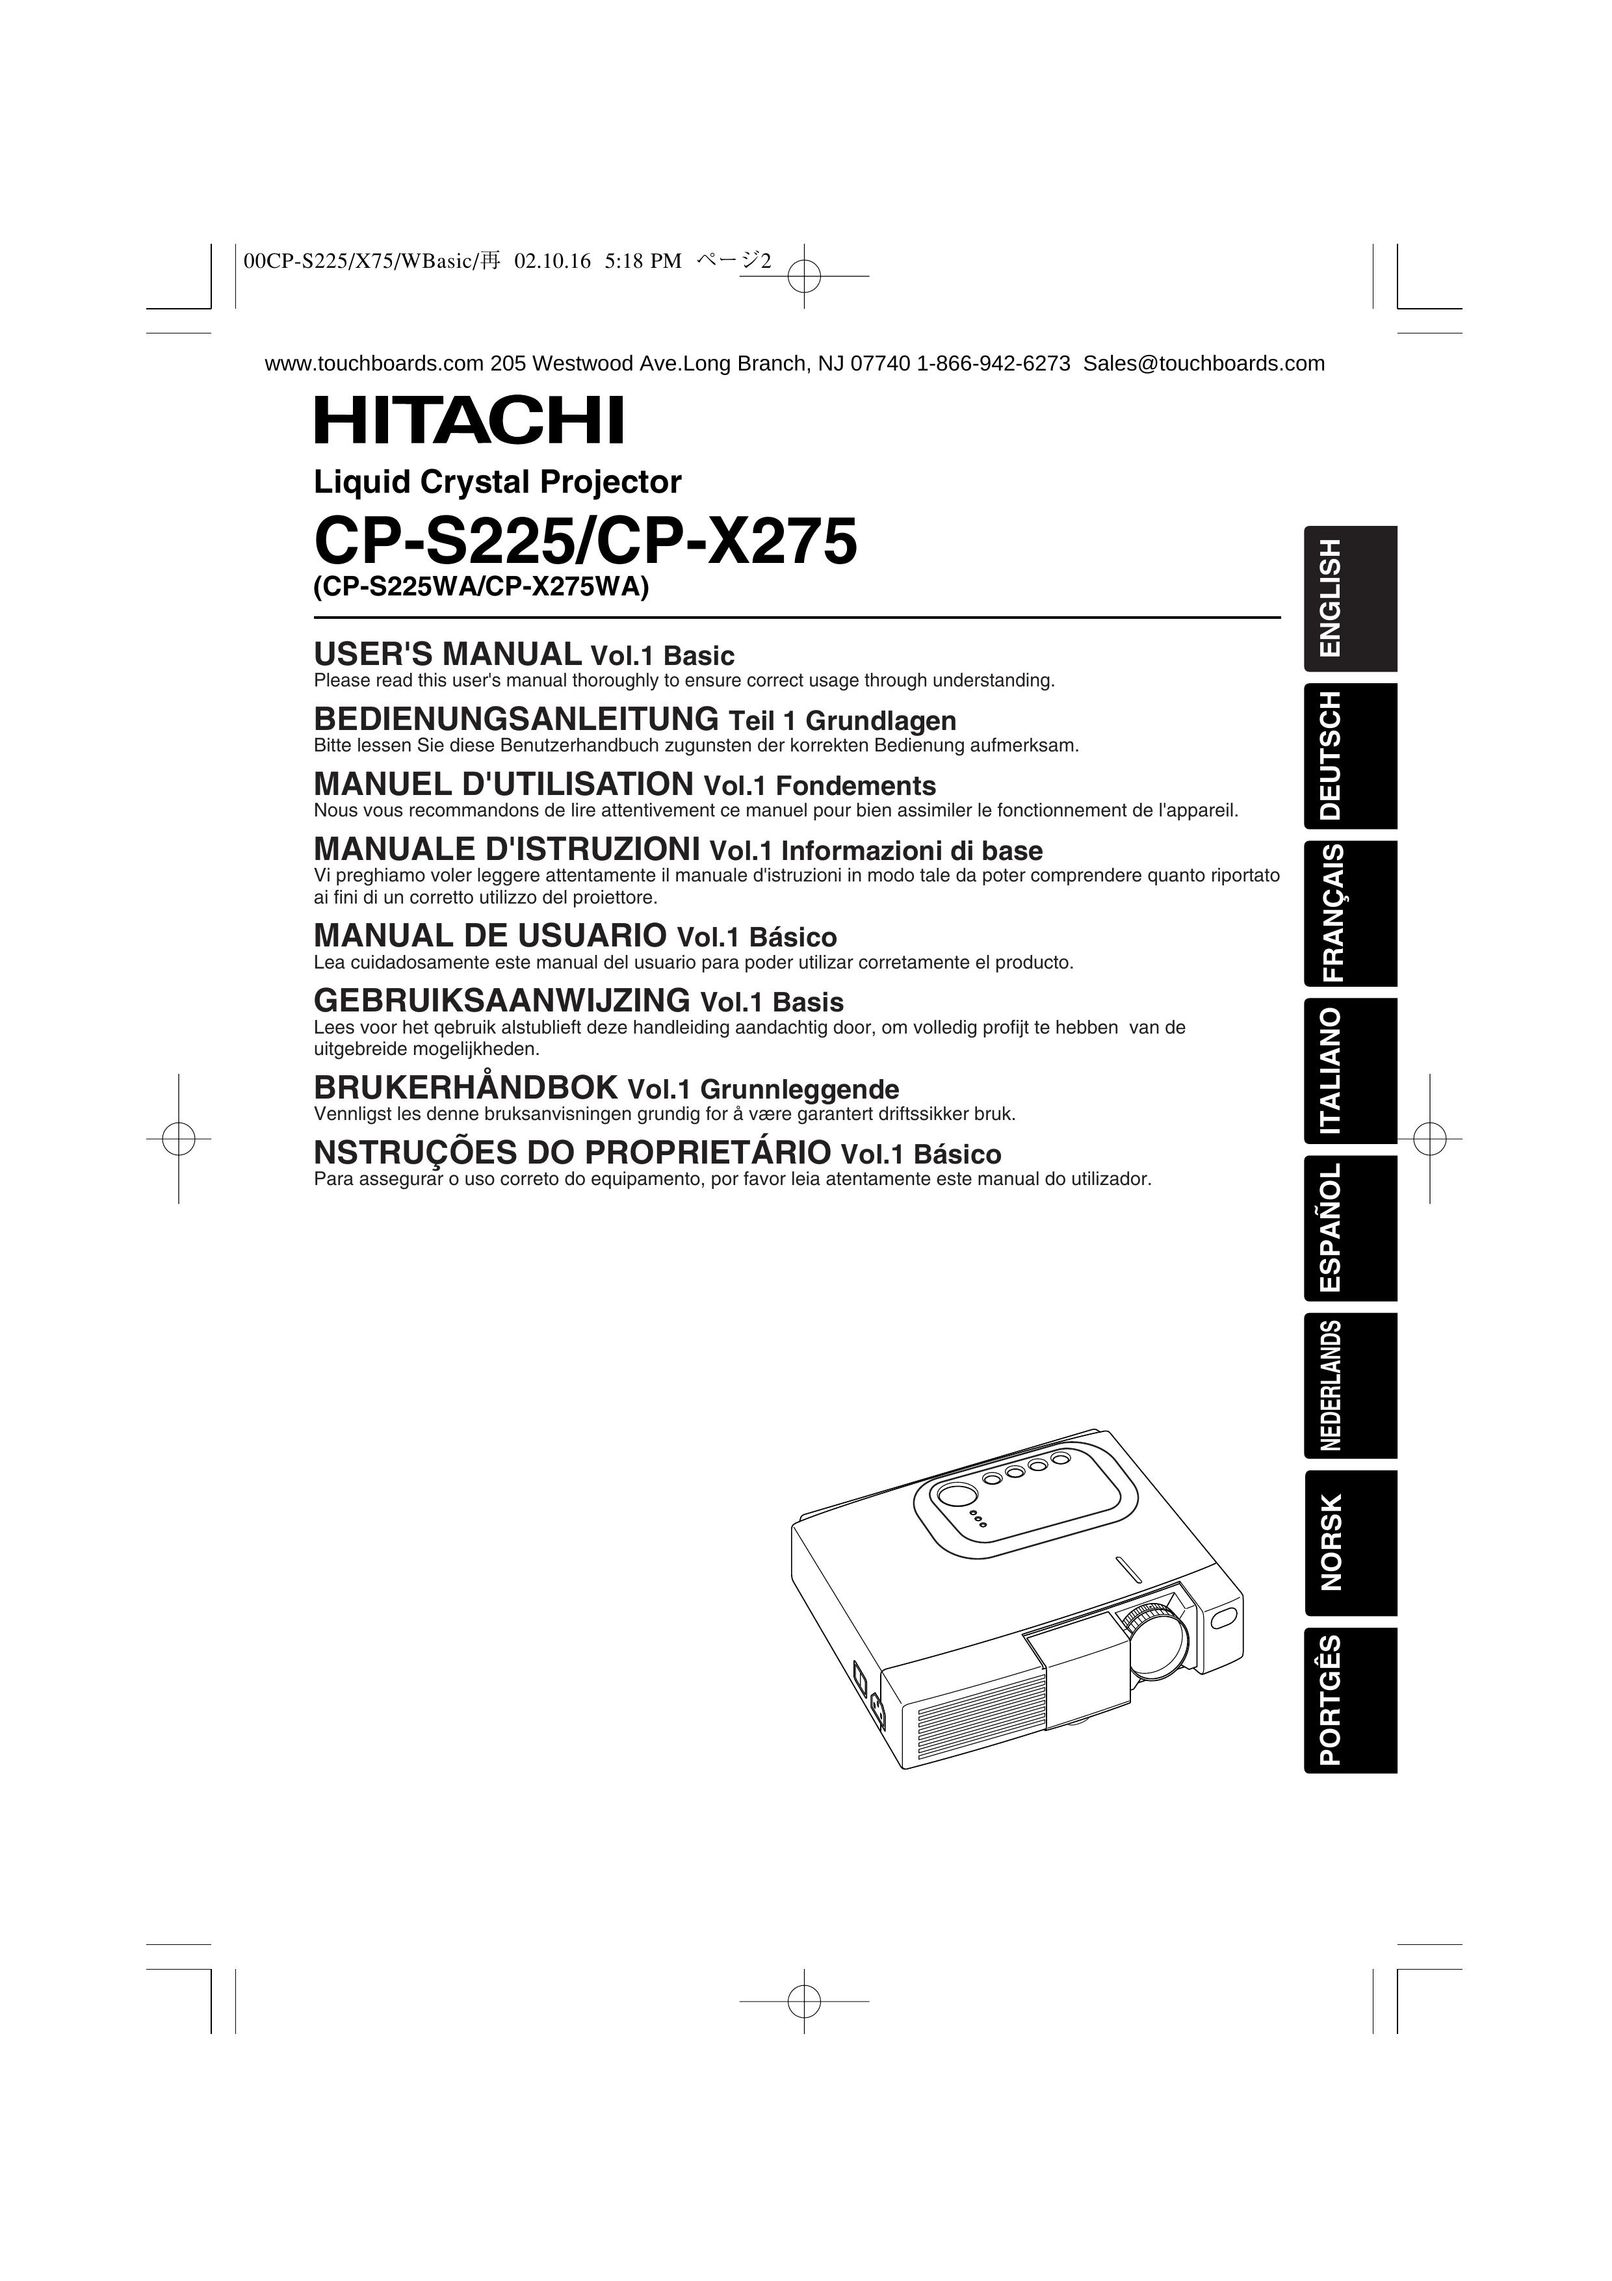 Hitachi CP-S225 Projector User Manual